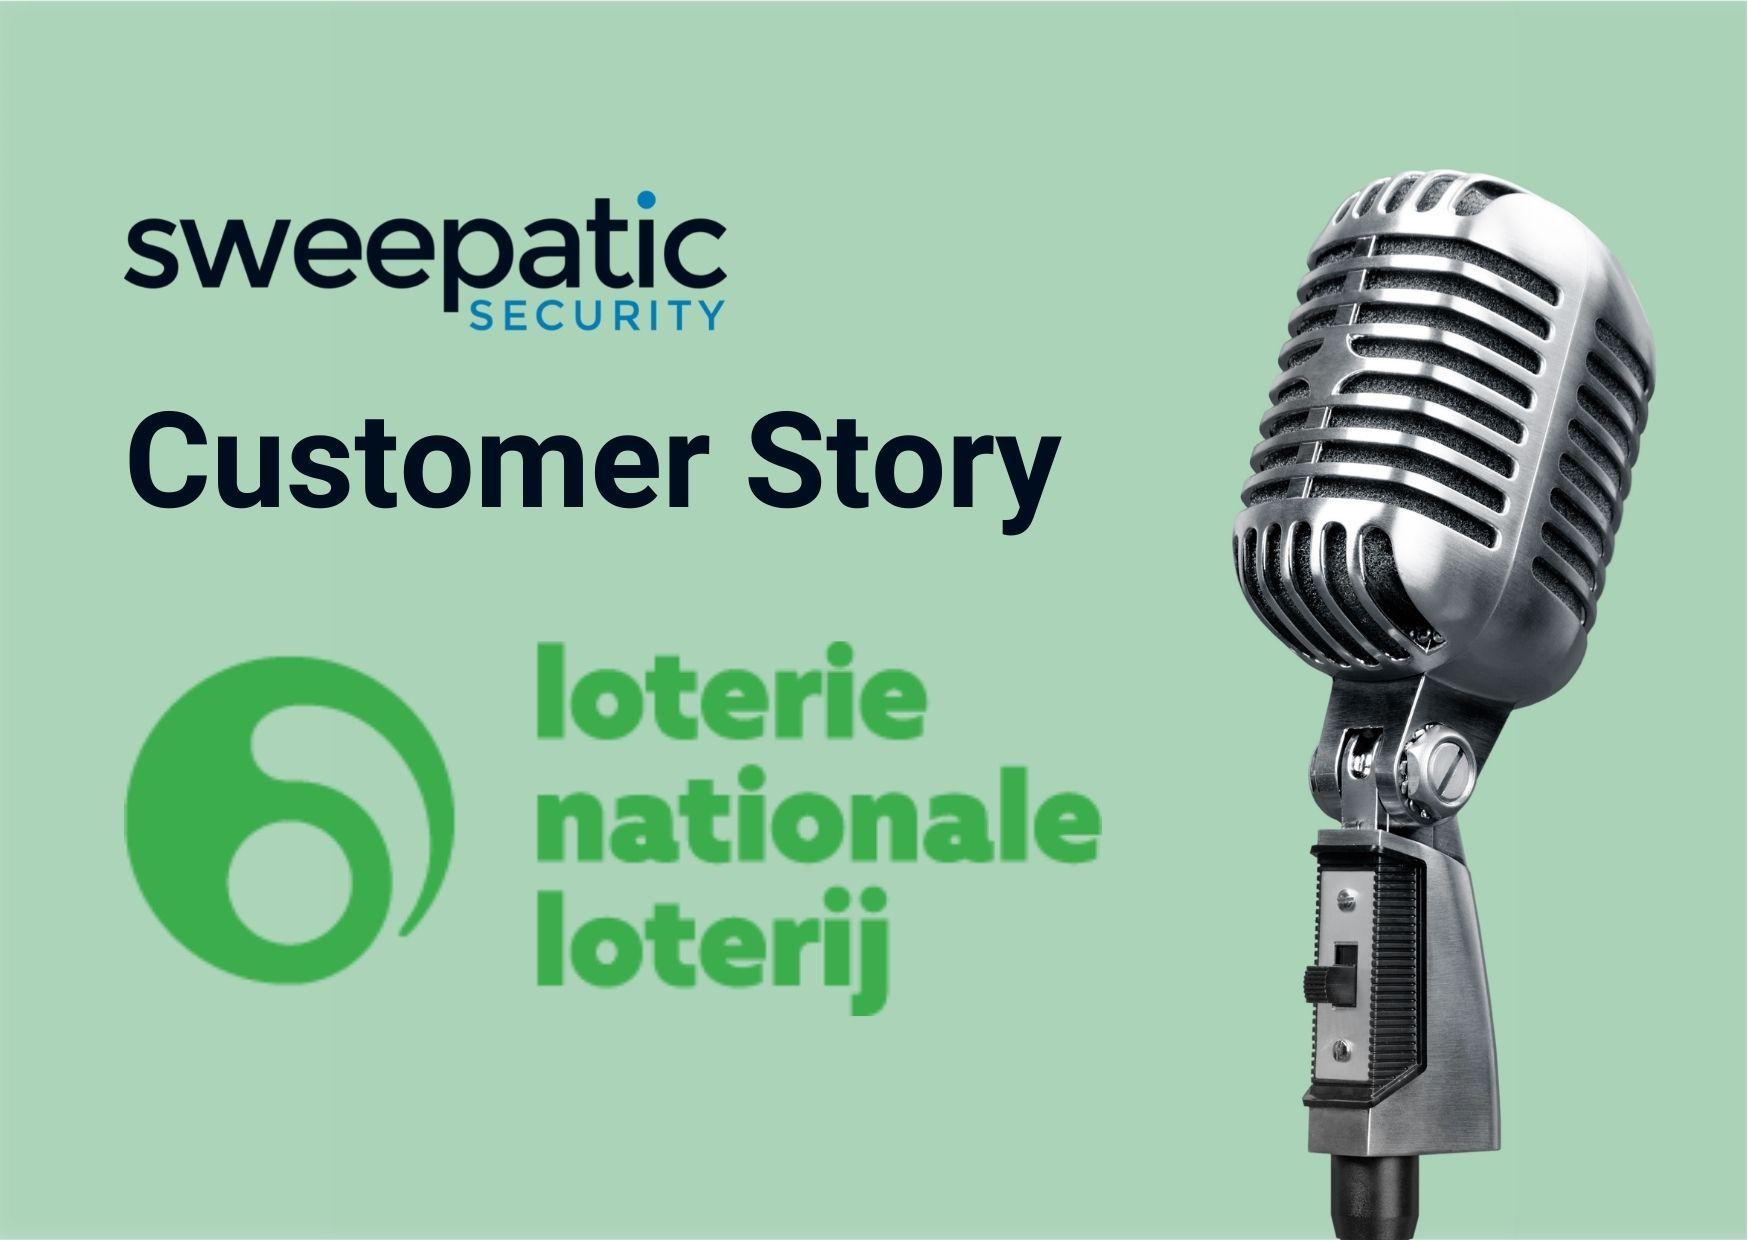 sweepatic security Customer story blog